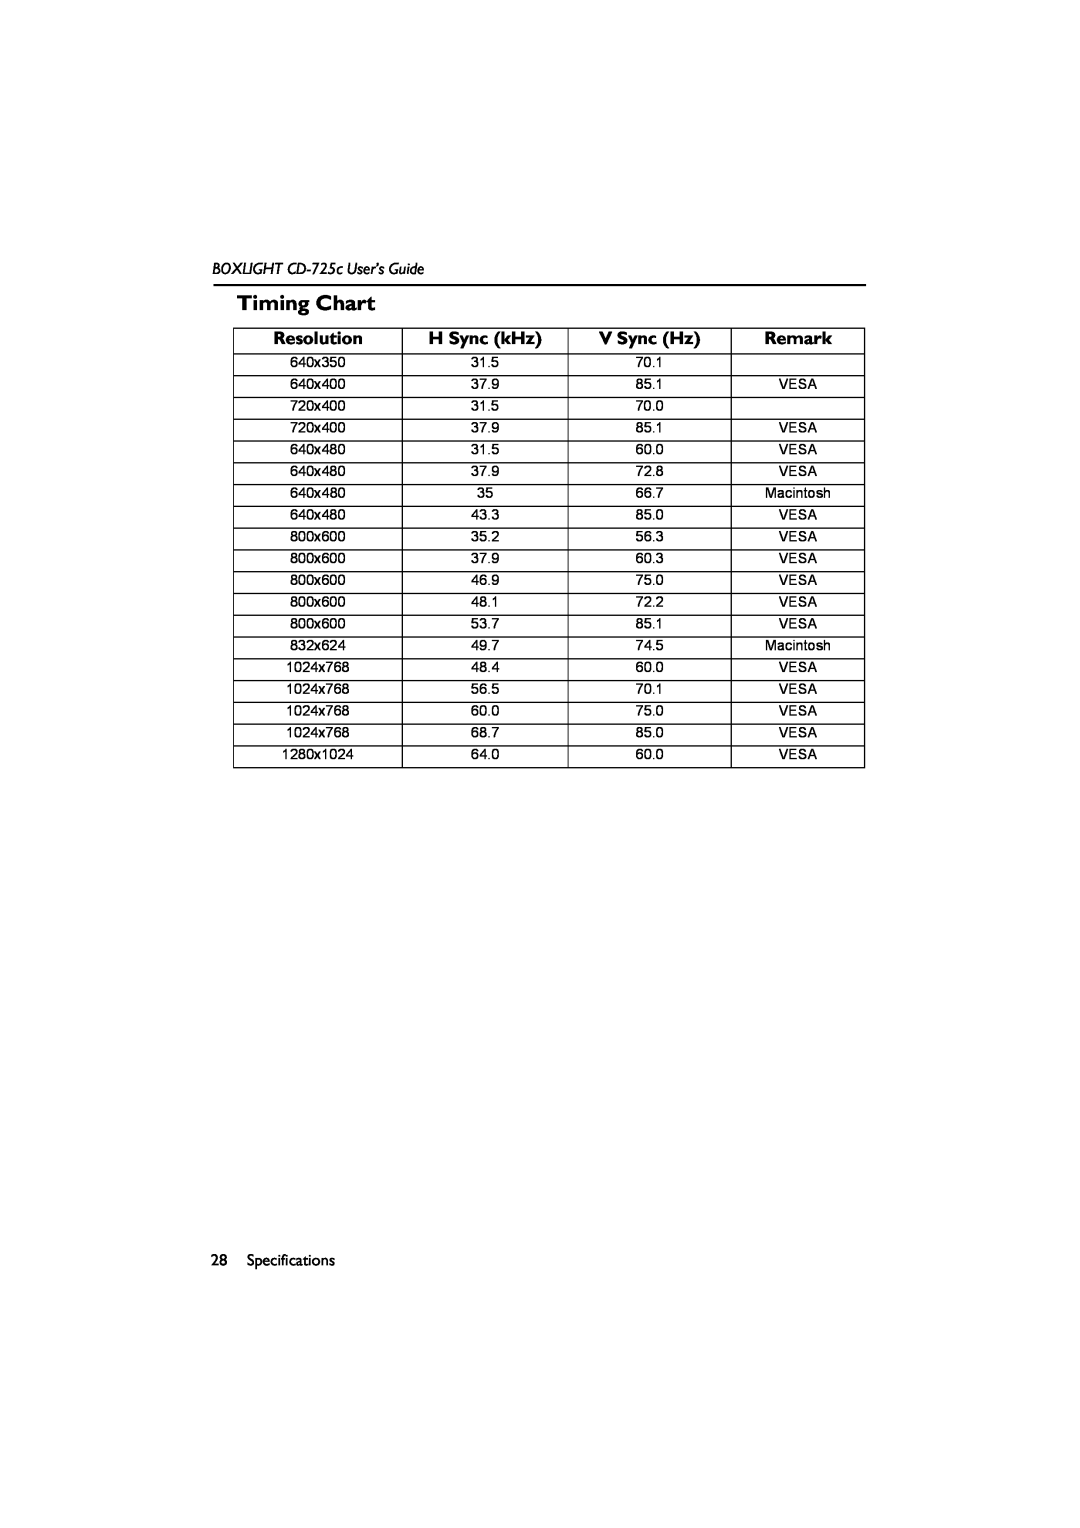 BOXLIGHT manual Timing Chart, Resolution, H Sync kHz, V Sync Hz, Remark, BOXLIGHT CD-725c User’s Guide 